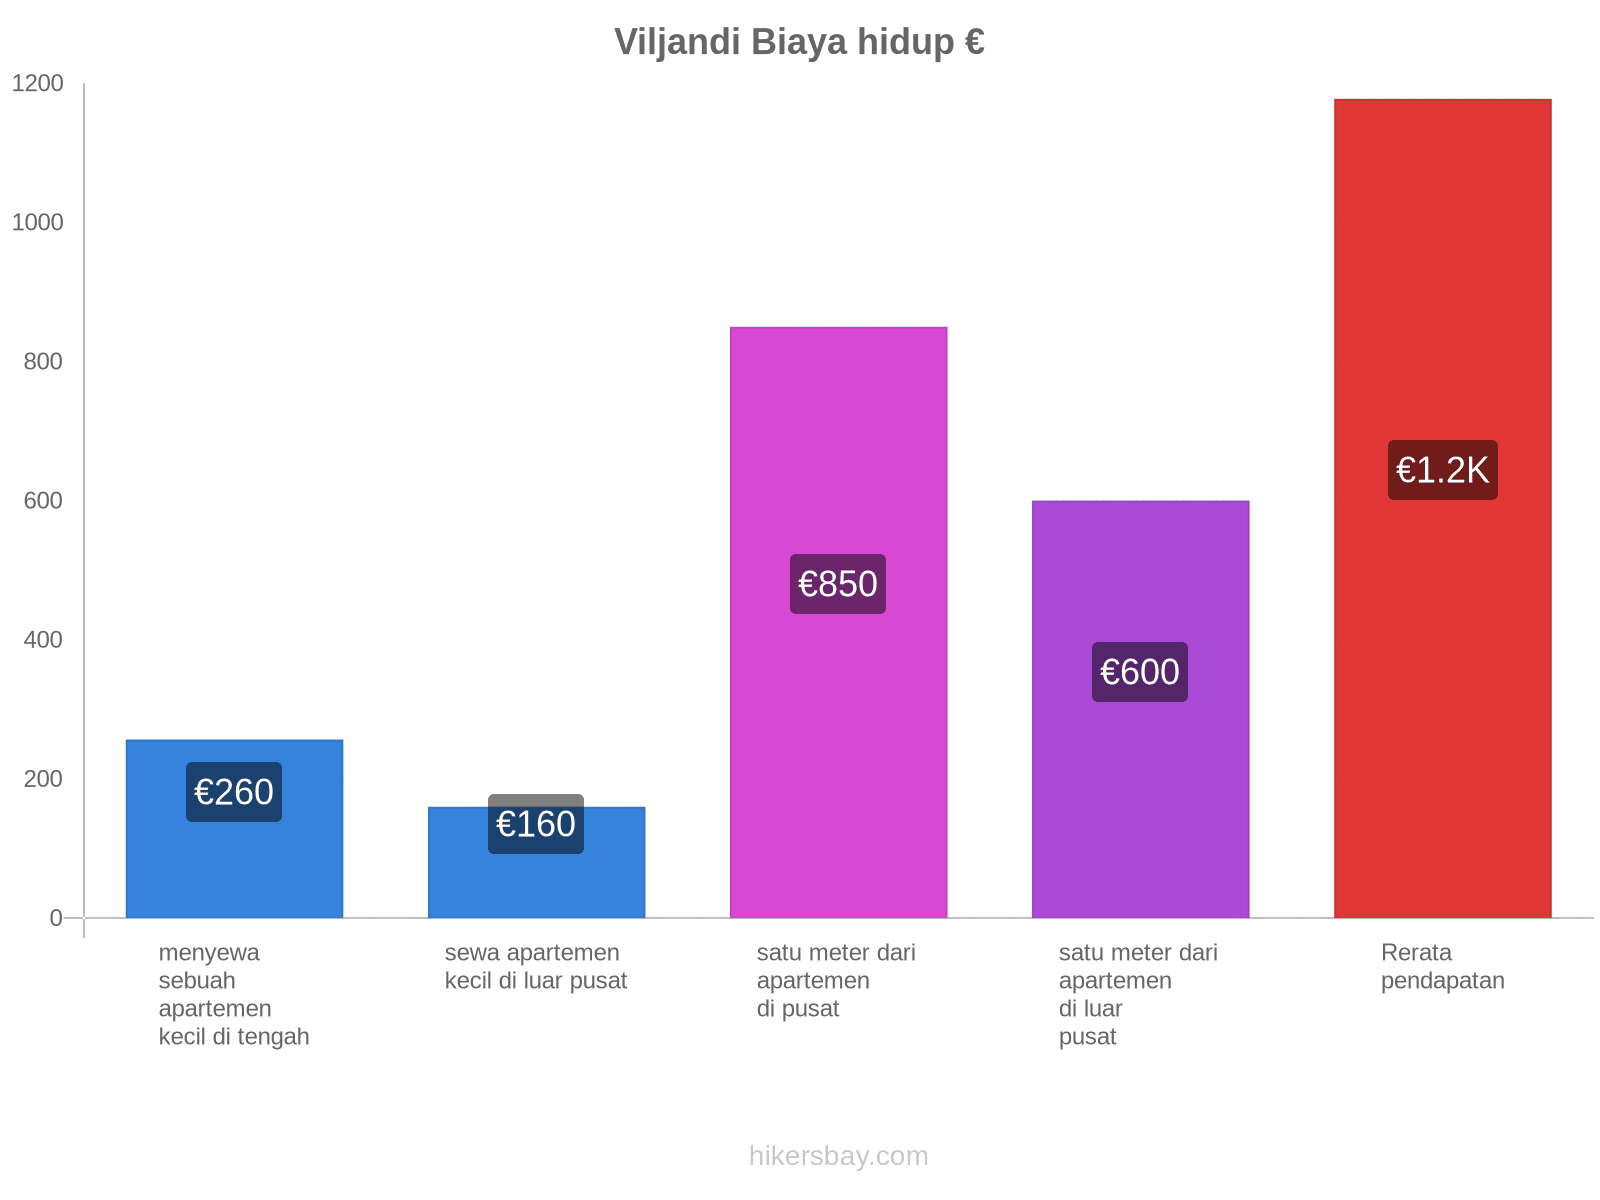 Viljandi biaya hidup hikersbay.com